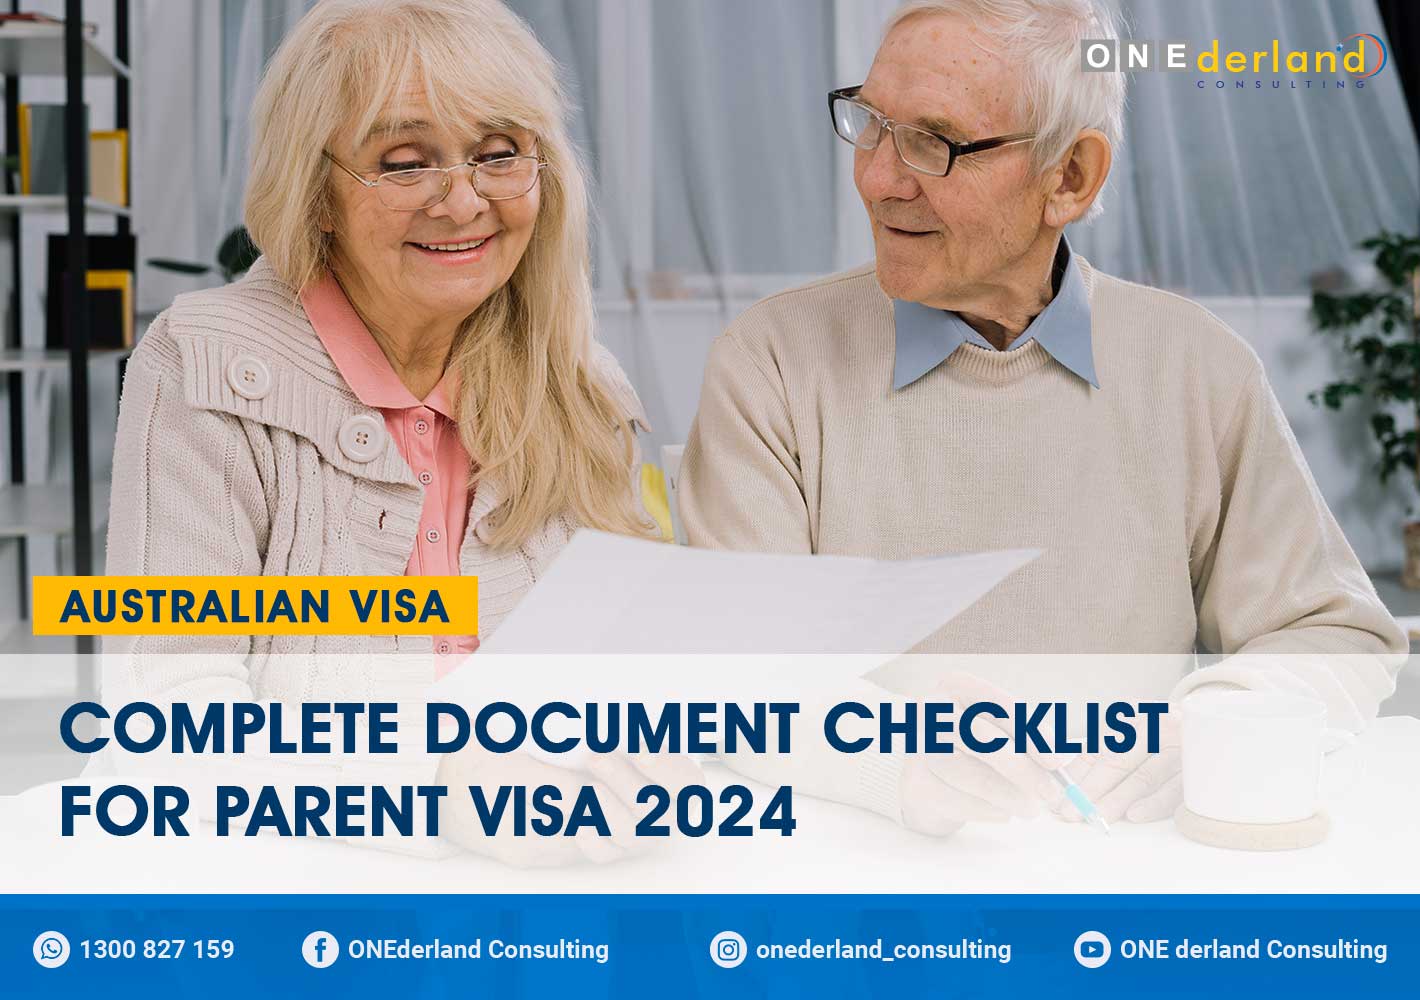 Complete Document Checklist for Parent Visa 2024